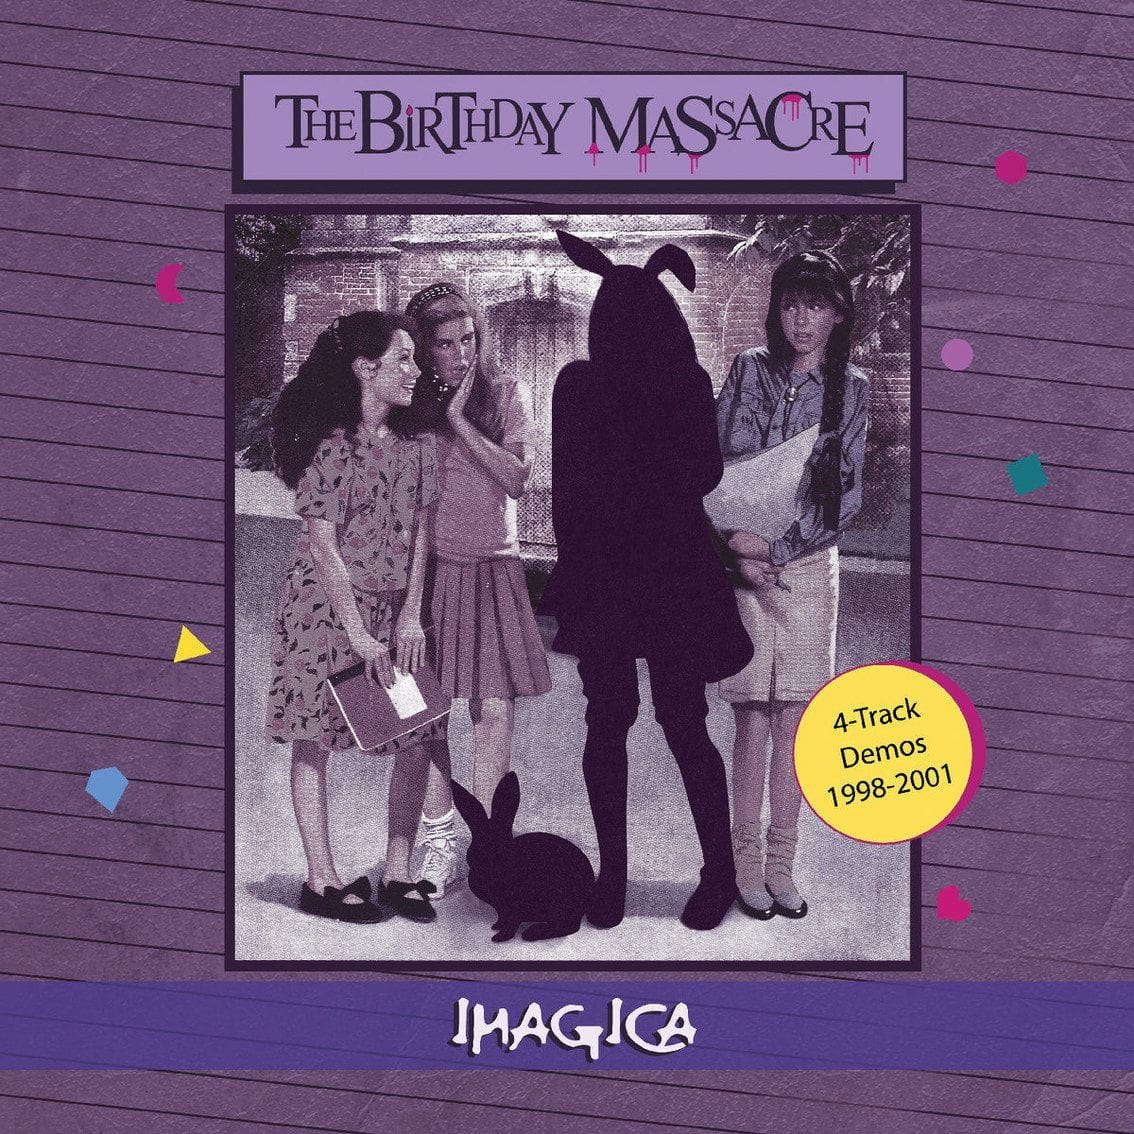 The Birthday Massacre reissue 11 4-track demos (1998-2001) on 'Imagica' vinyl and CD